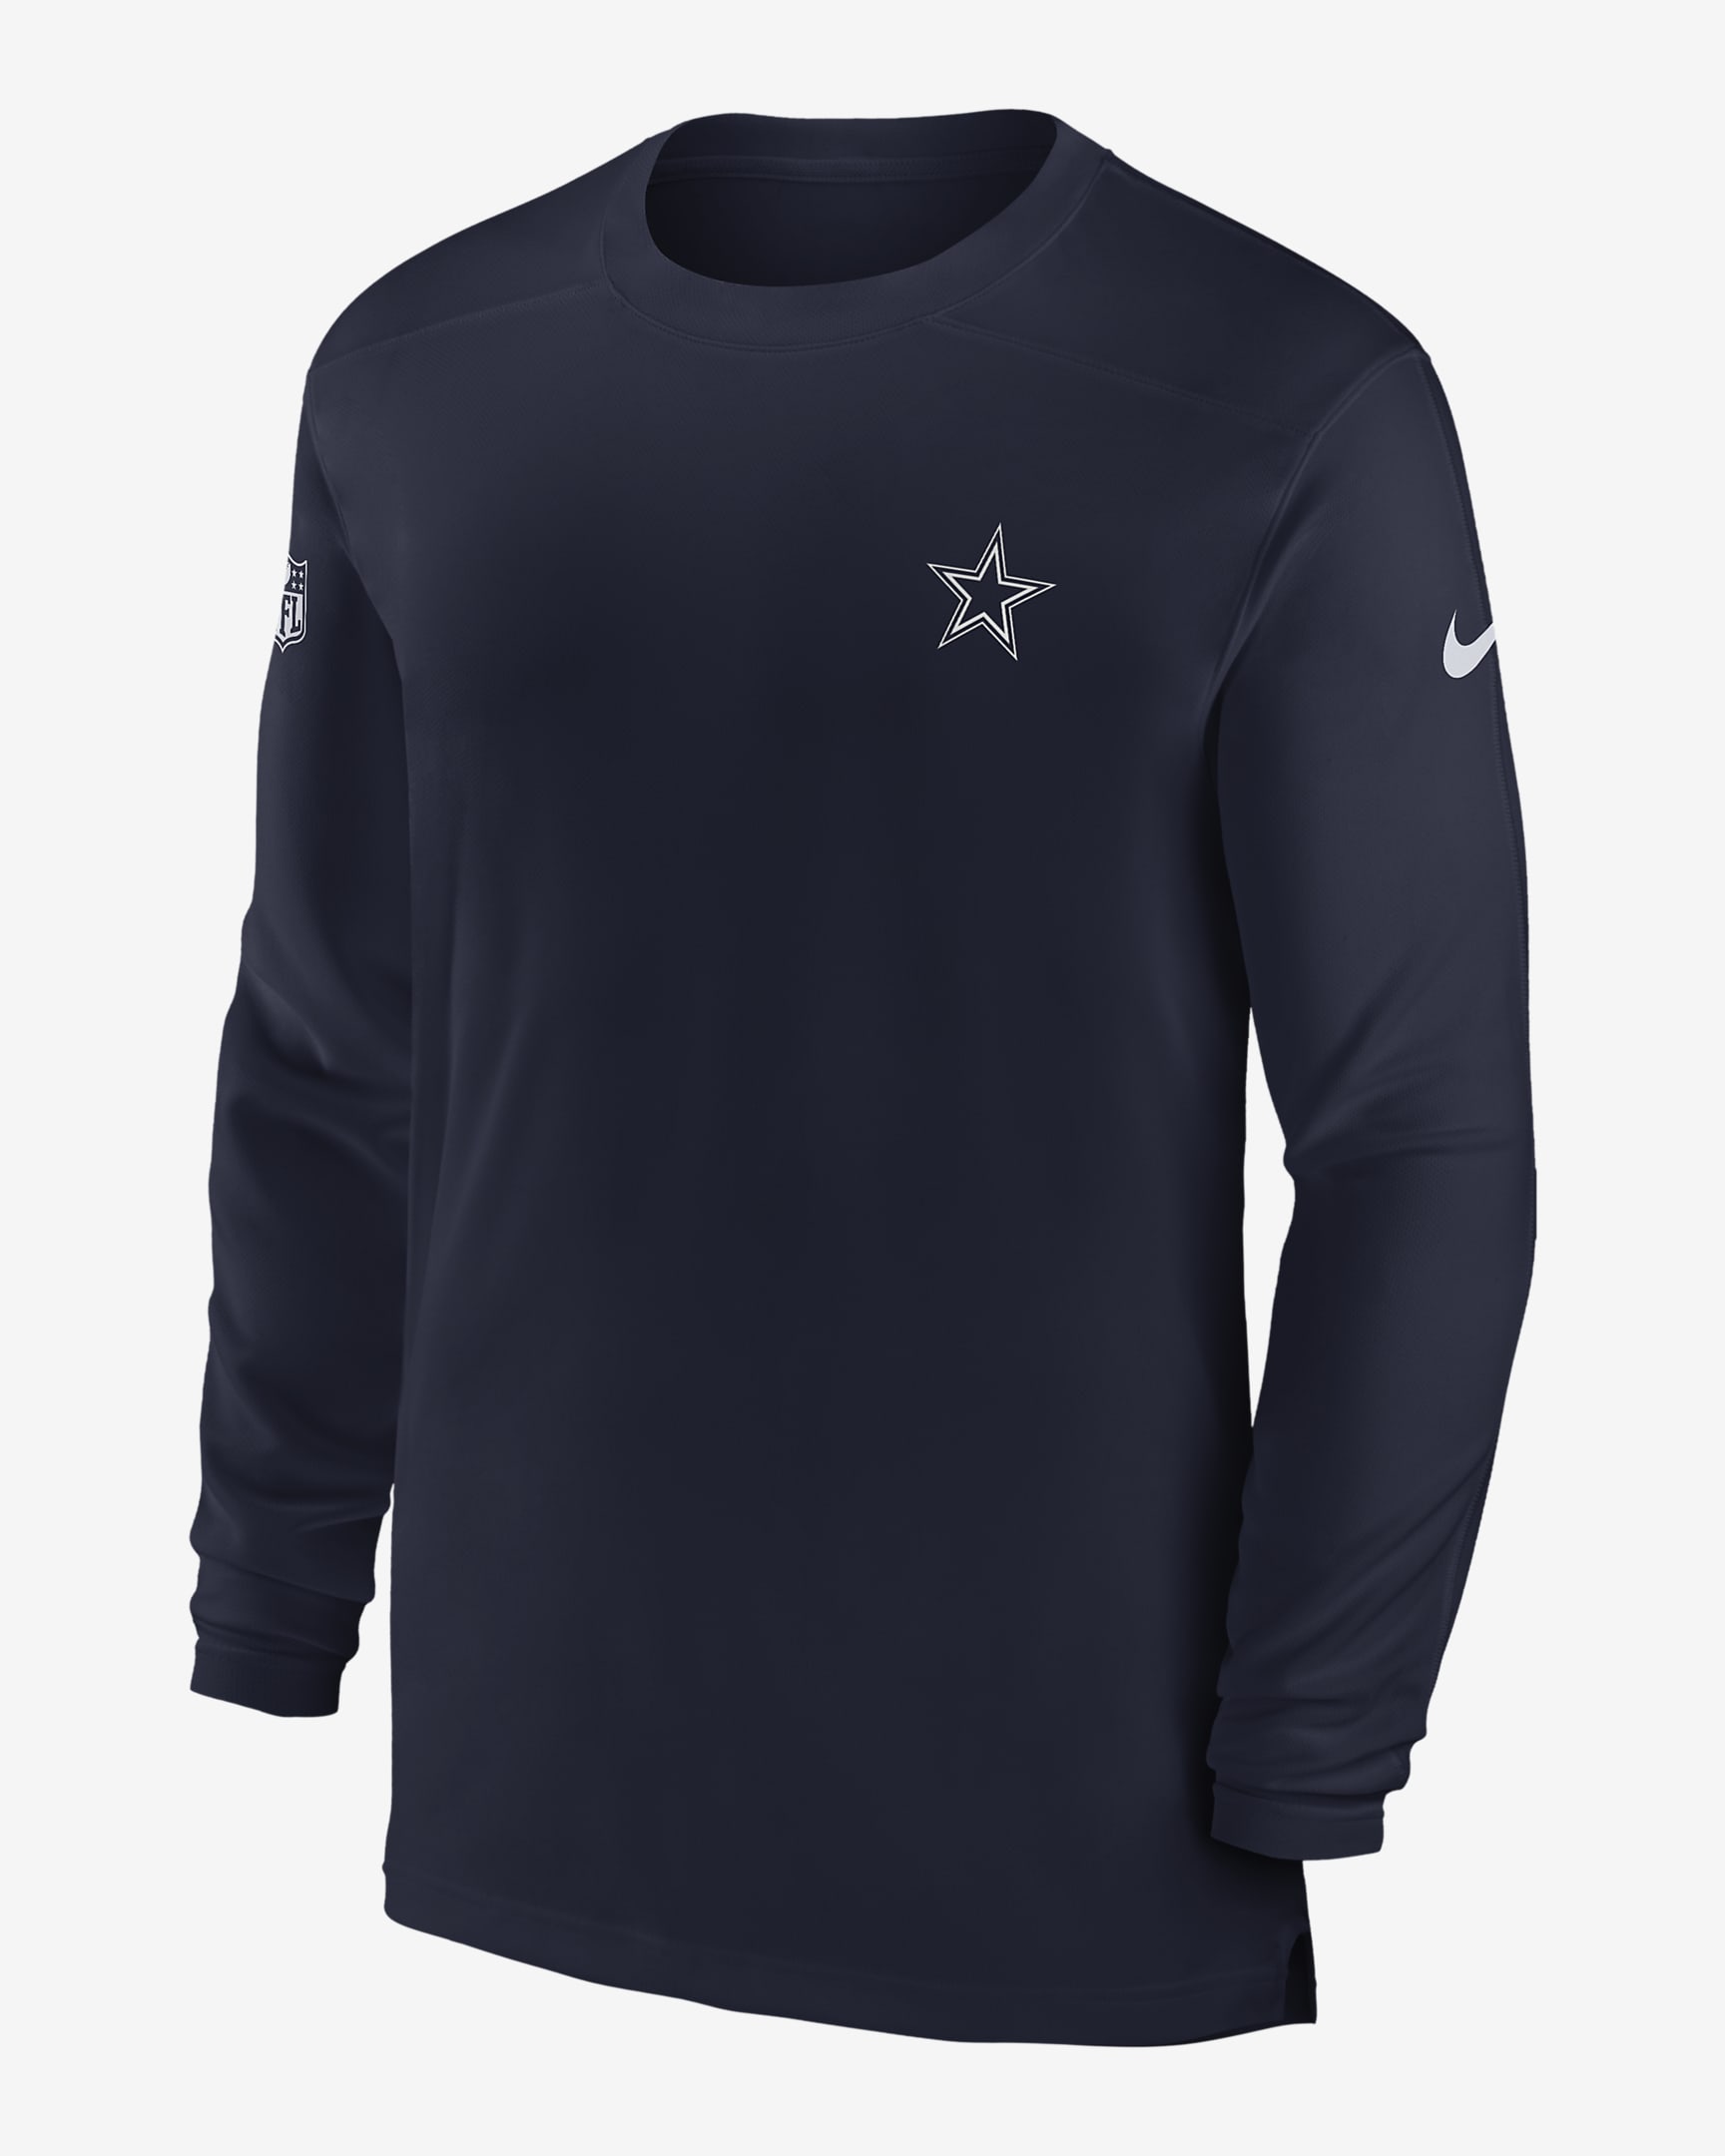 Nike Dri-FIT Sideline Coach (NFL Dallas Cowboys) Men's Long-Sleeve Top ...